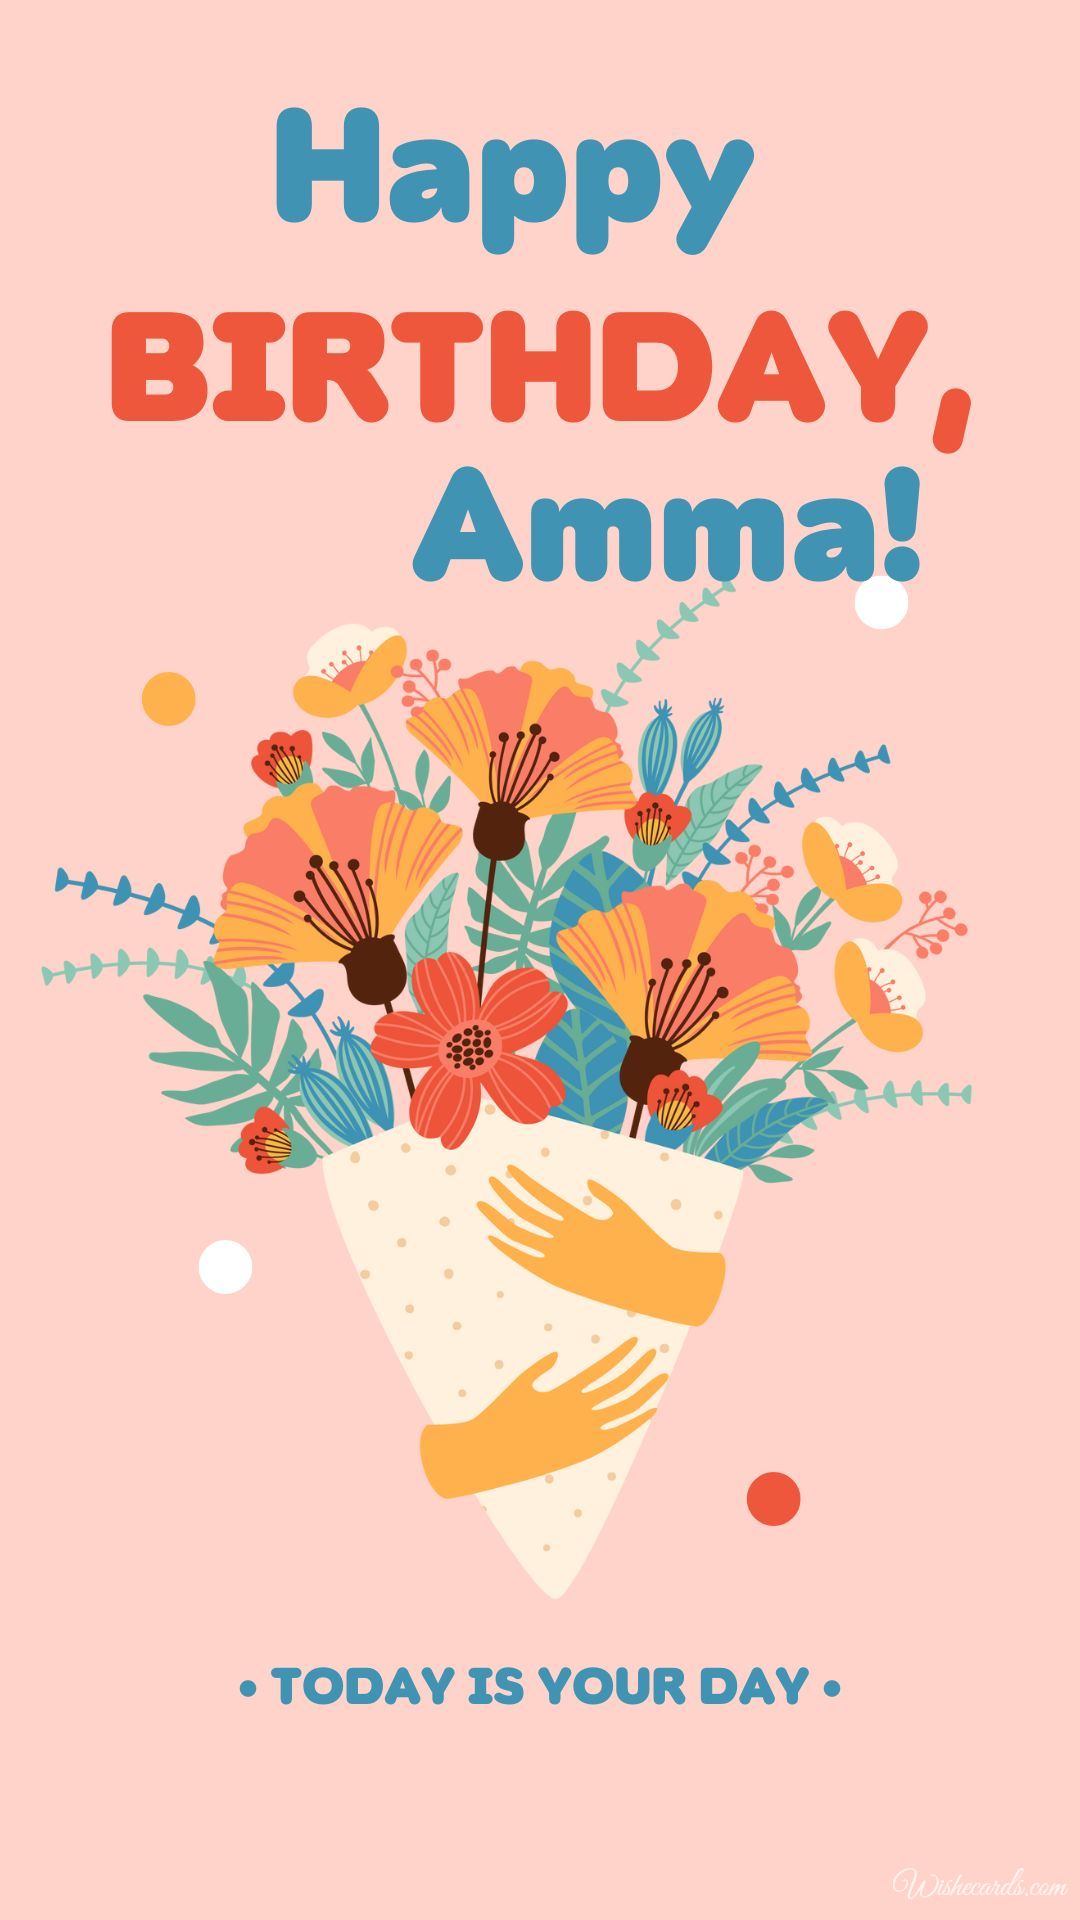 Happy Birthday Image for Amma